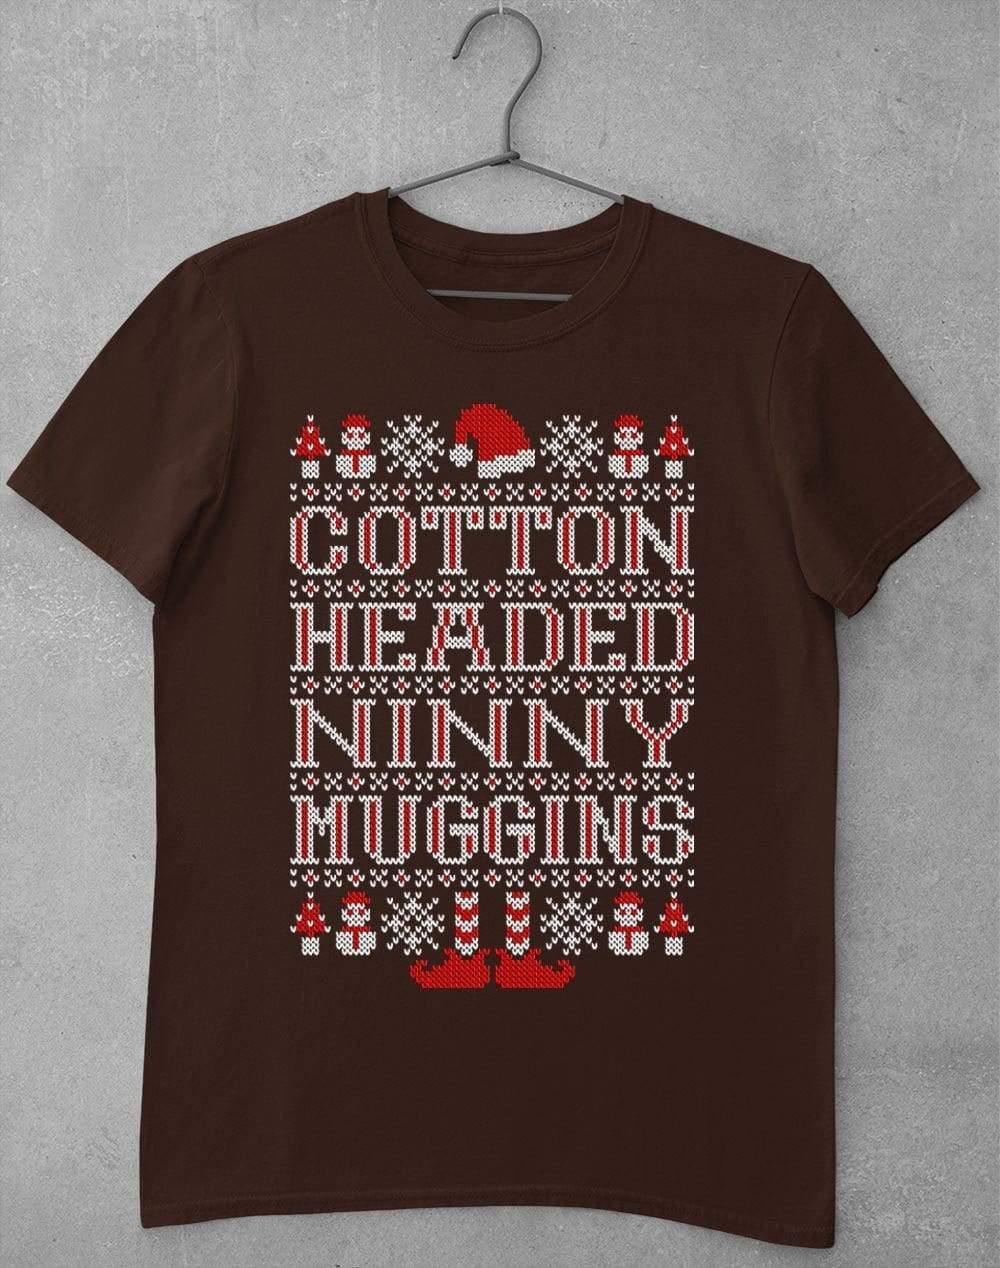 Cotton Headed Ninny Muggins Festive Knitted-Look T-Shirt S / Dark Chocolate  - Off World Tees